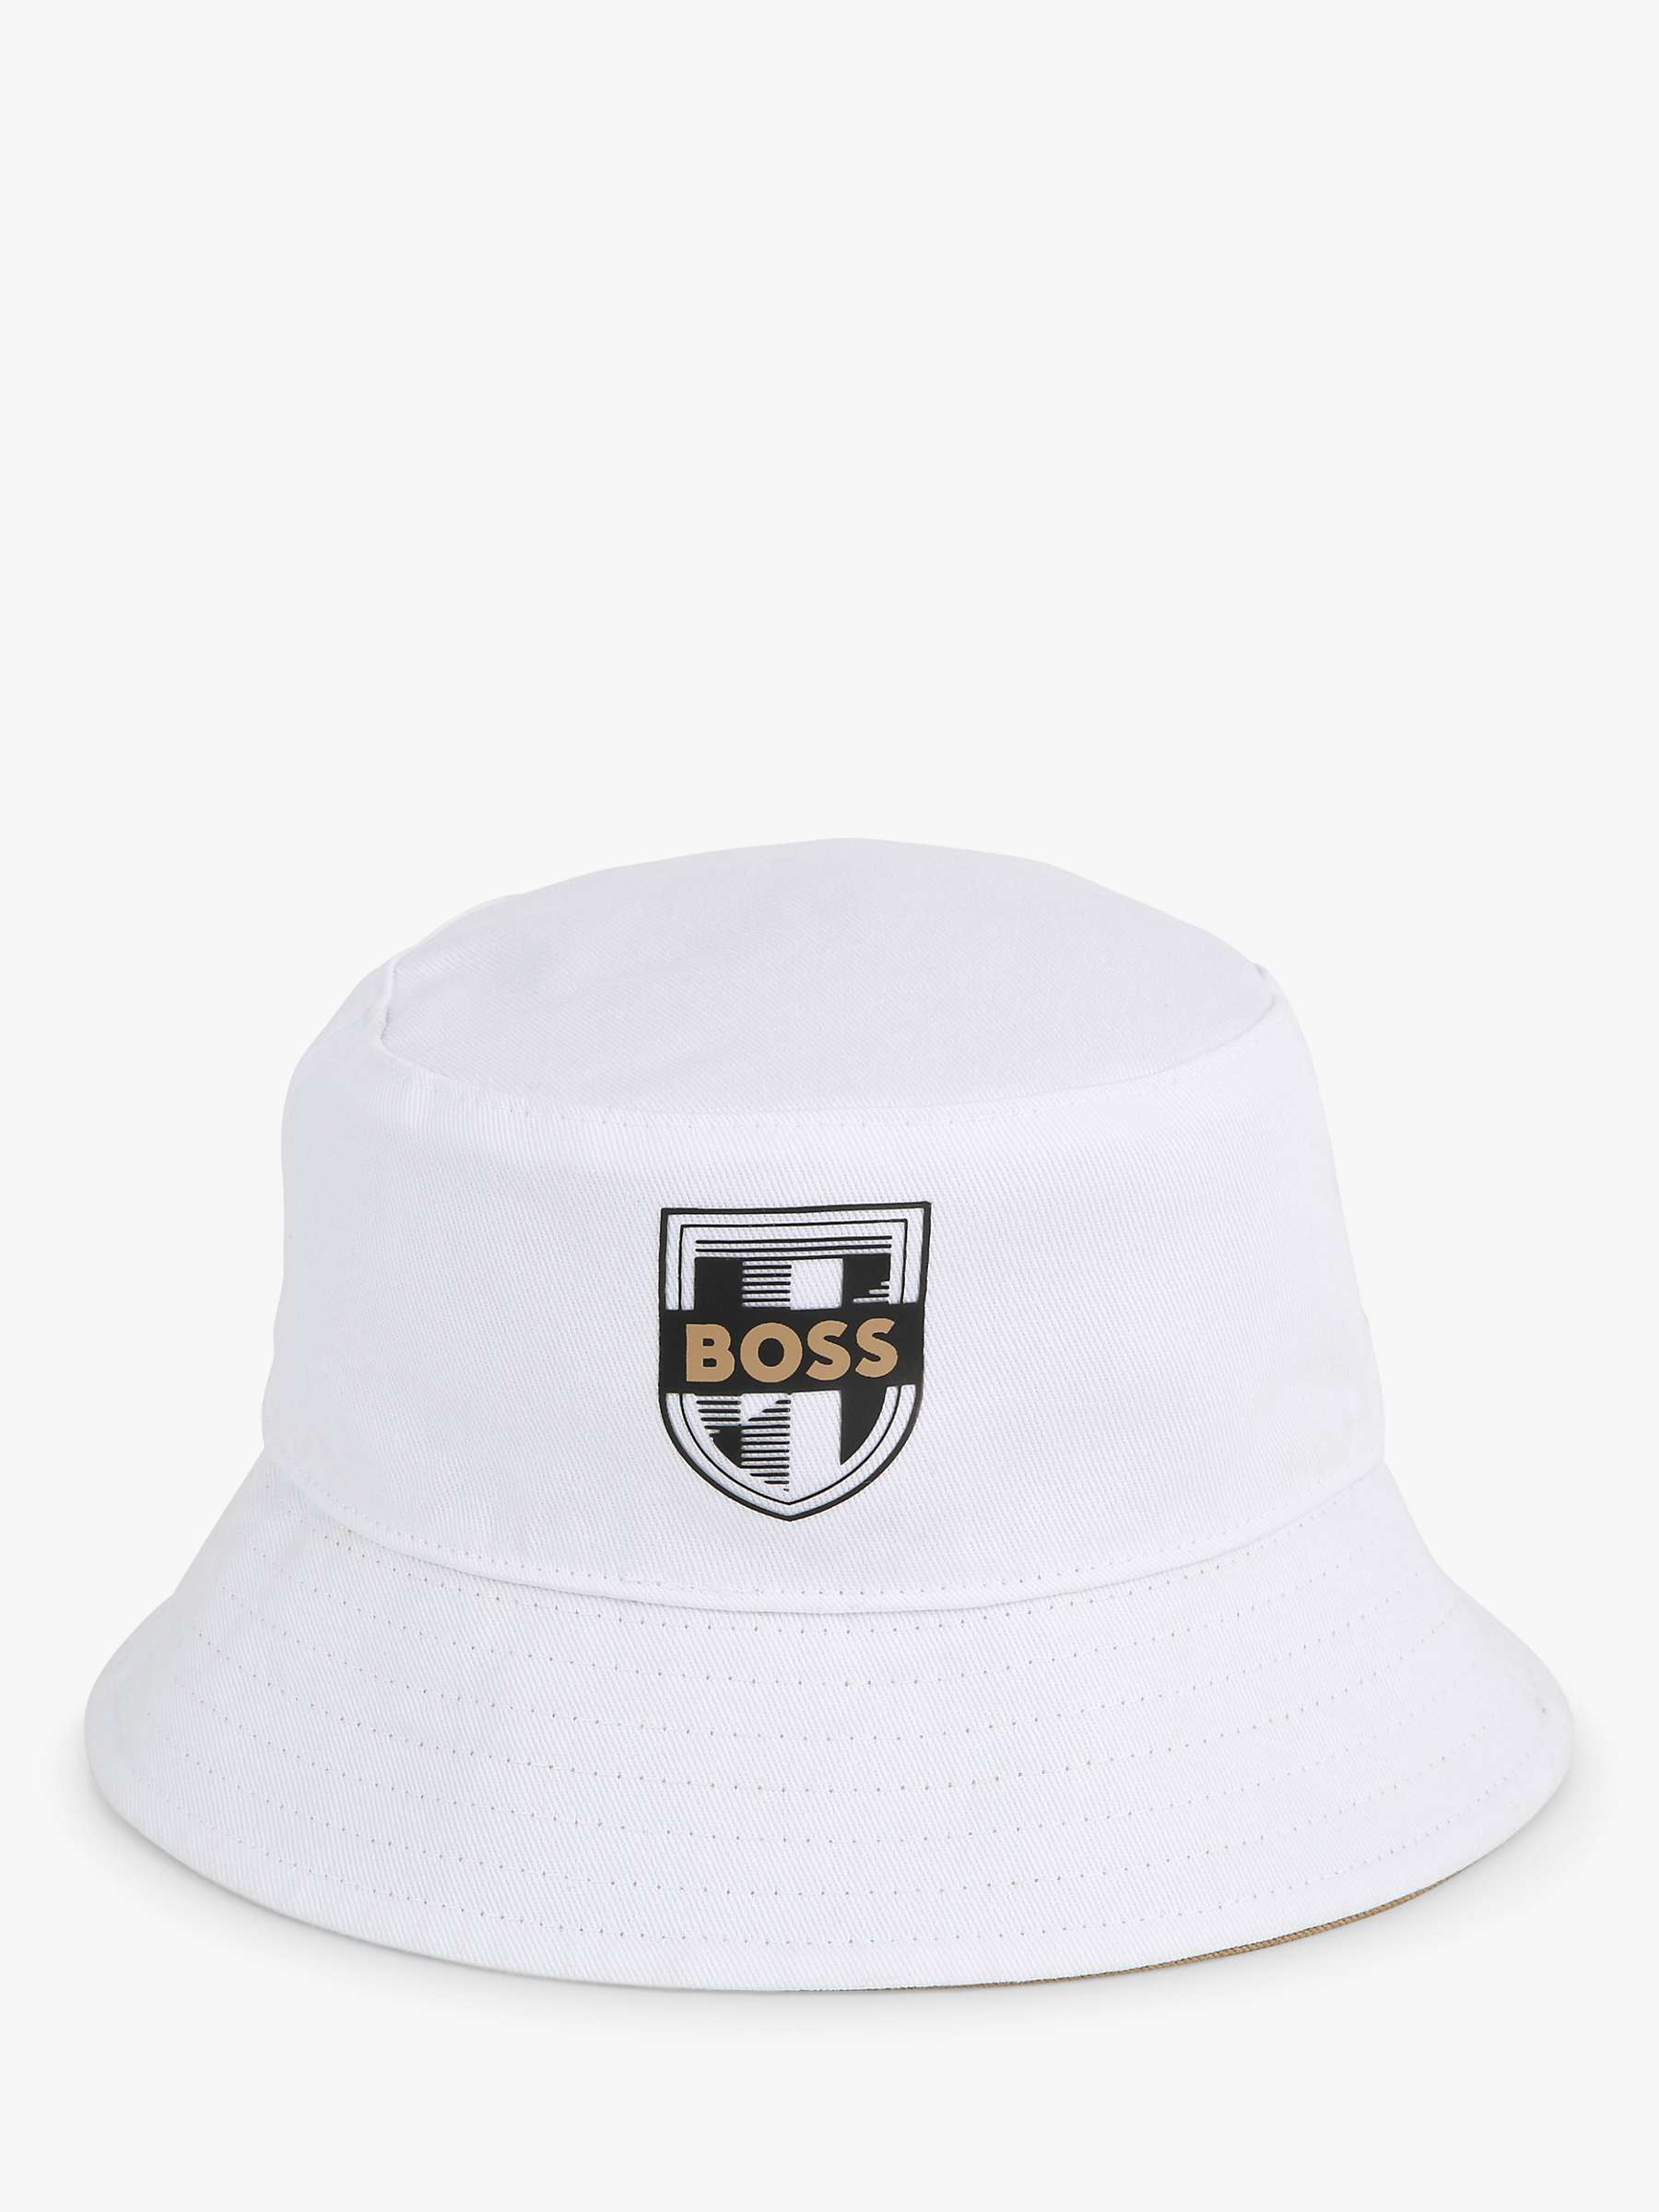 Buy BOSS Baby Reversible Stripe Bucket Hat, White/Brown Online at johnlewis.com